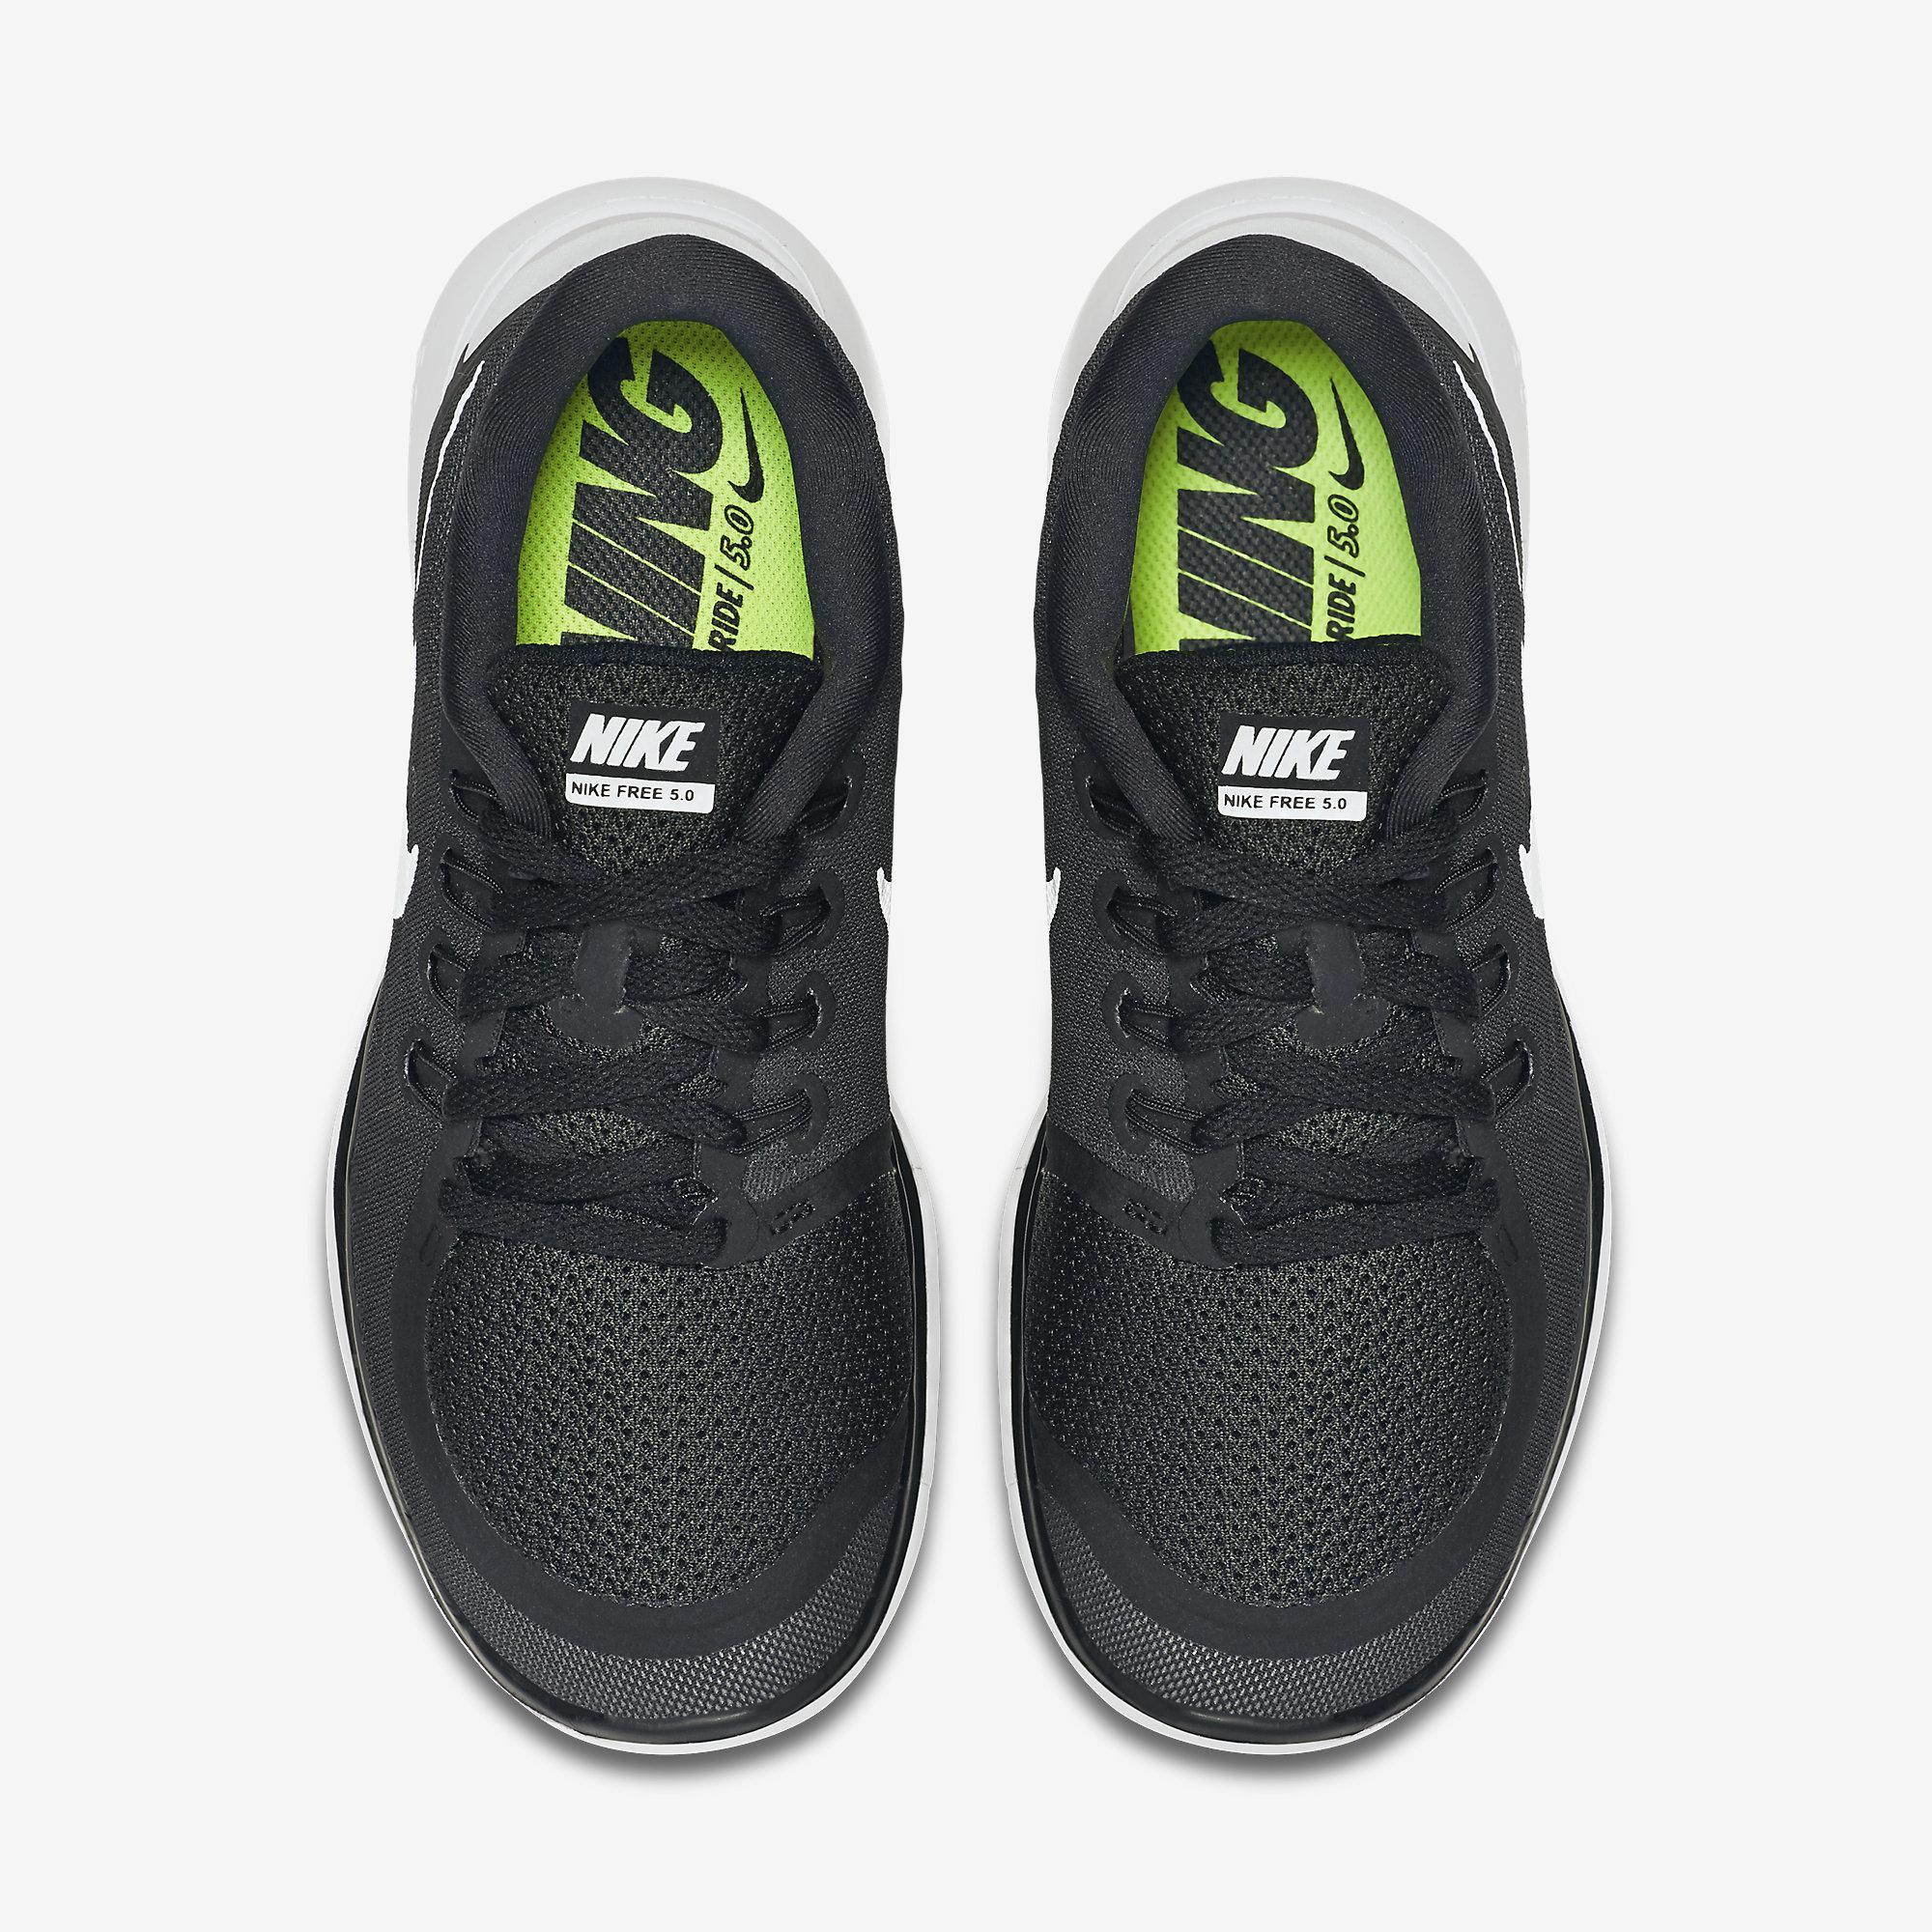 Nike Womens Free 5.0 Running Shoes Black/Grey